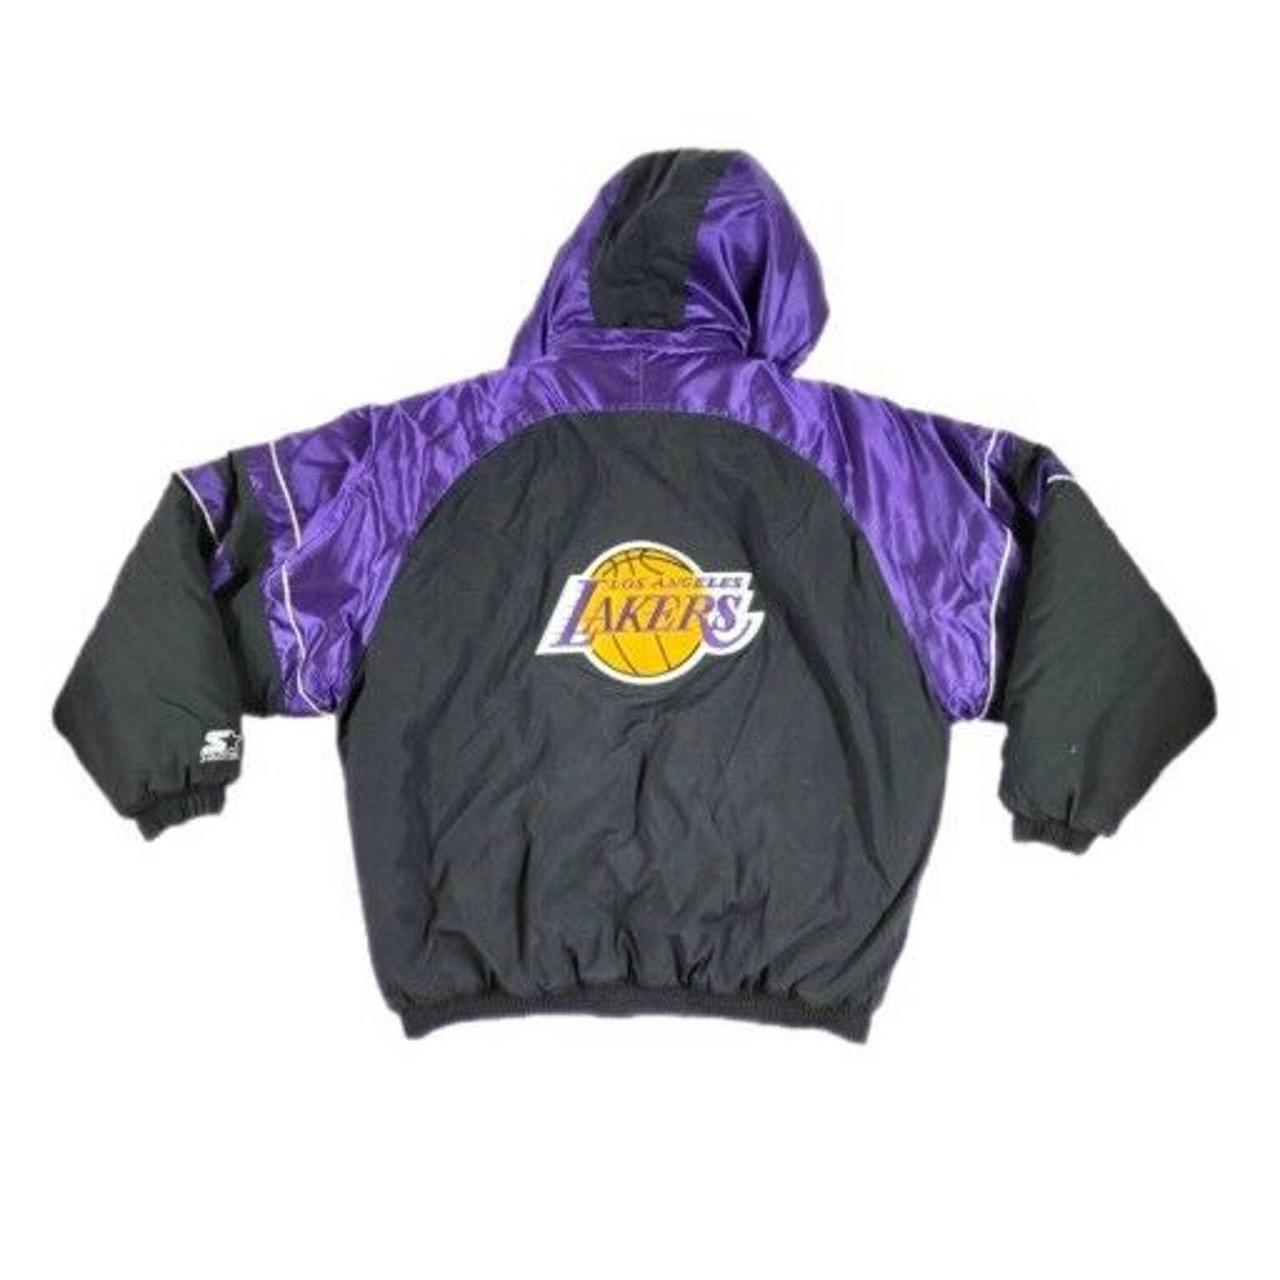 90's starter jacket